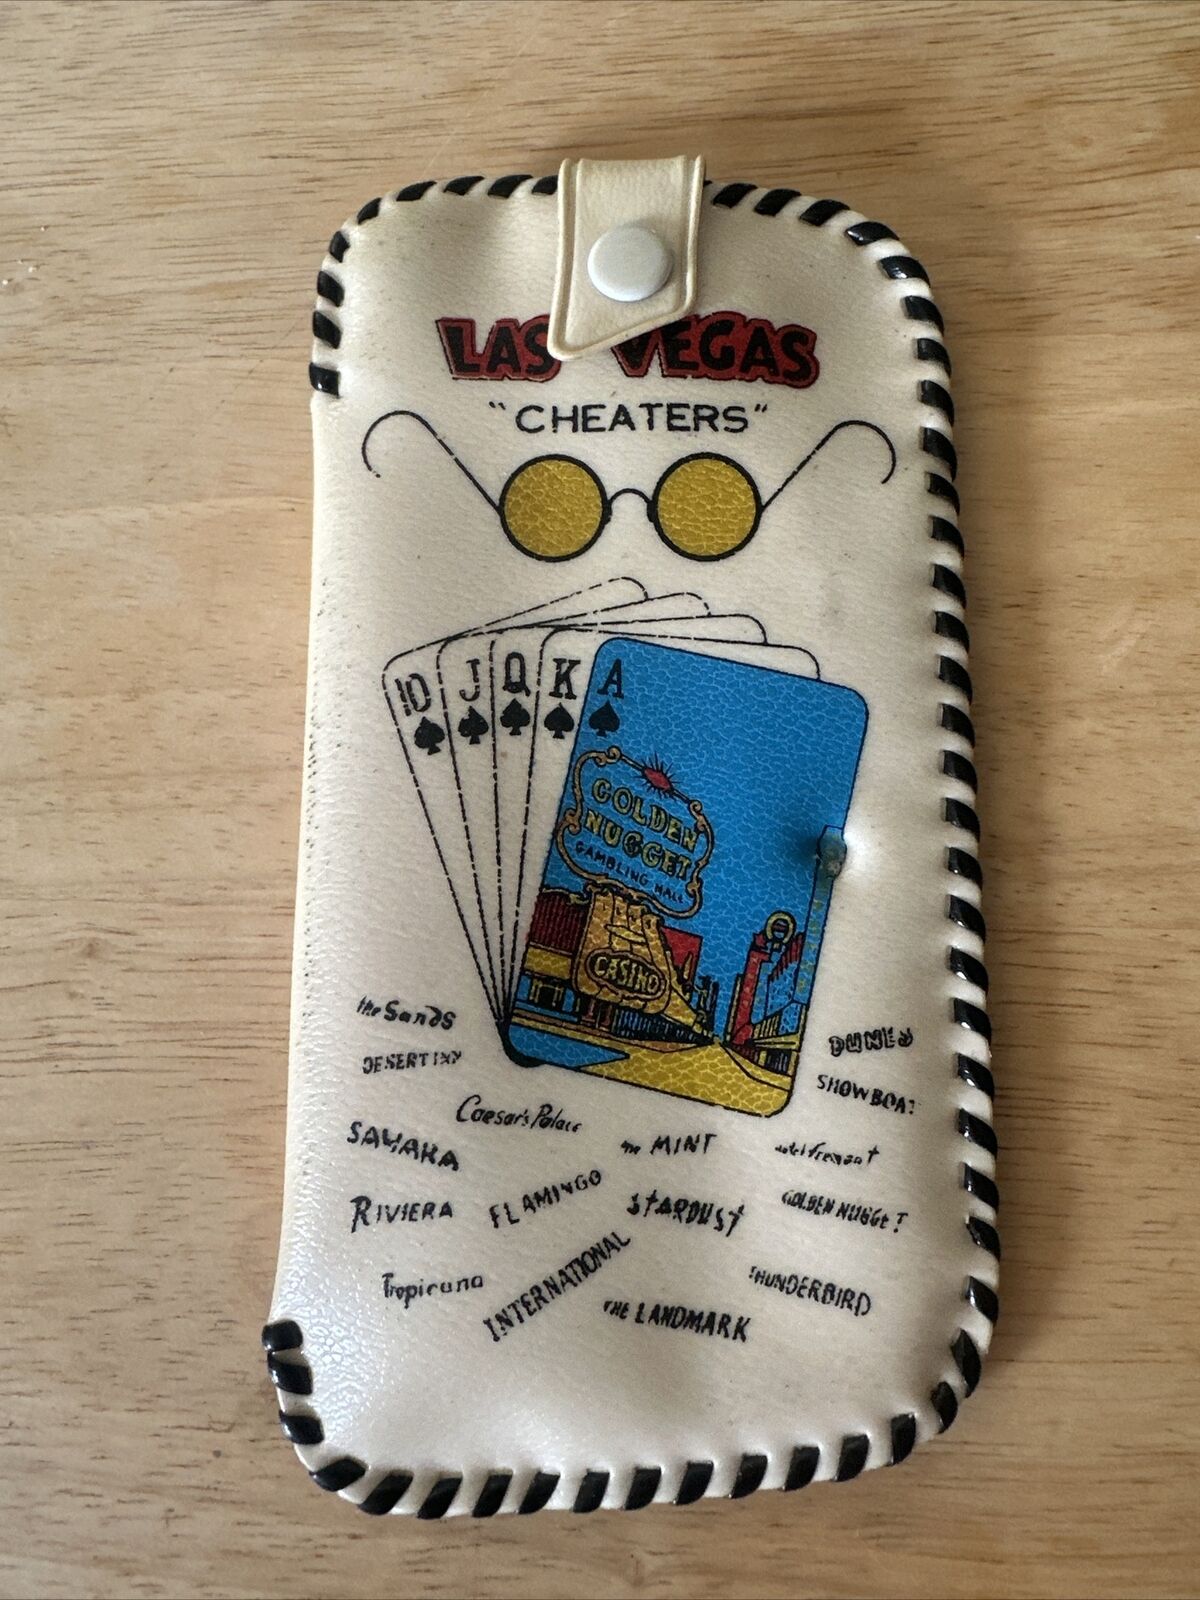 Vintage Las Vegas “Cheaters” Casino Cards Soft Eyeglass Case Travel Souvenir